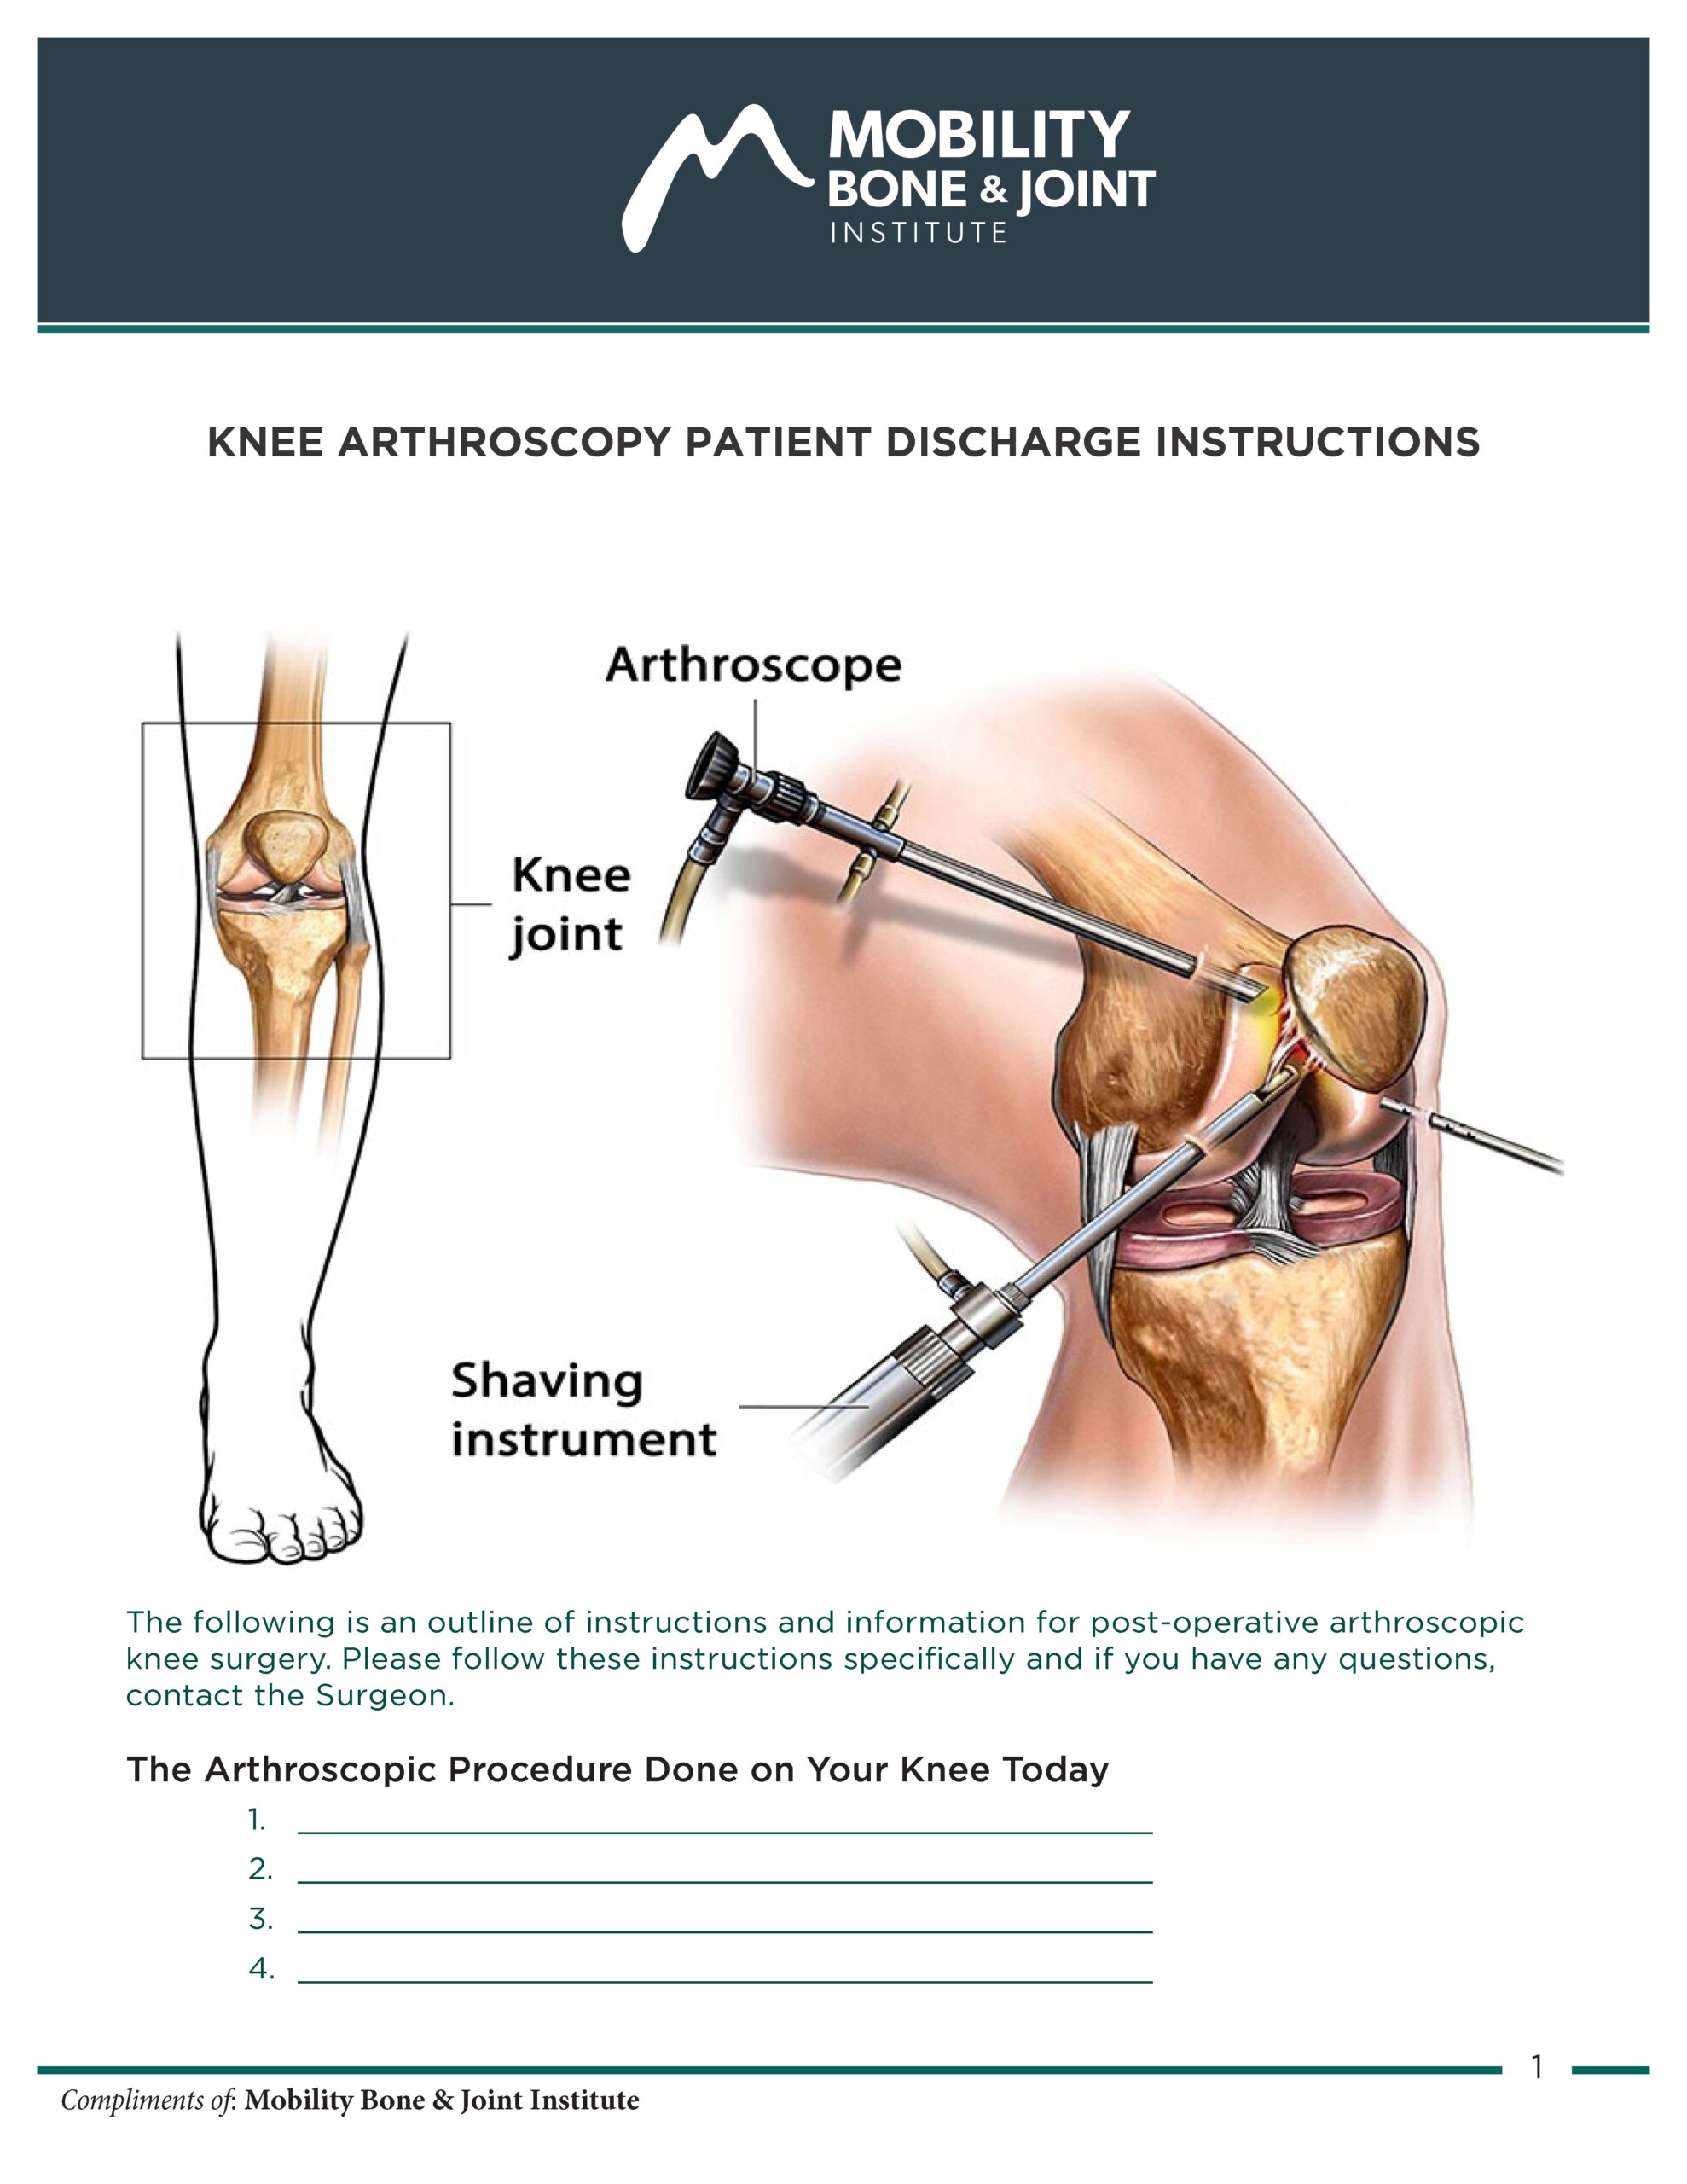 POST-OPERATIVE KNEE ARTHROSCOPY INSTRUCTIONS